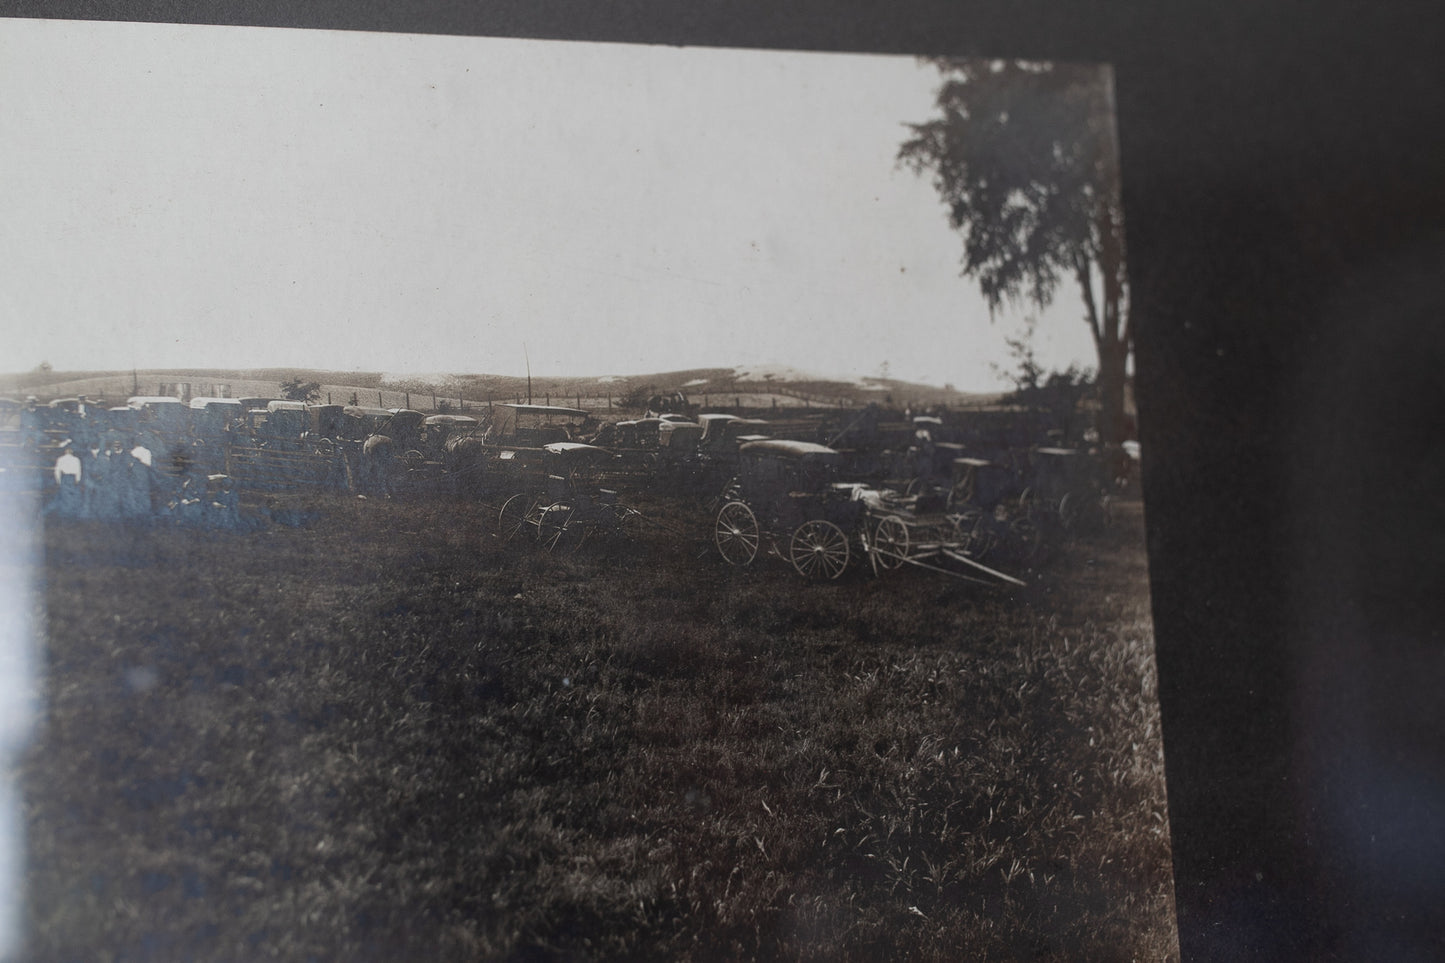 Panoramic Photograph Framed - Antique Yardlong Photo